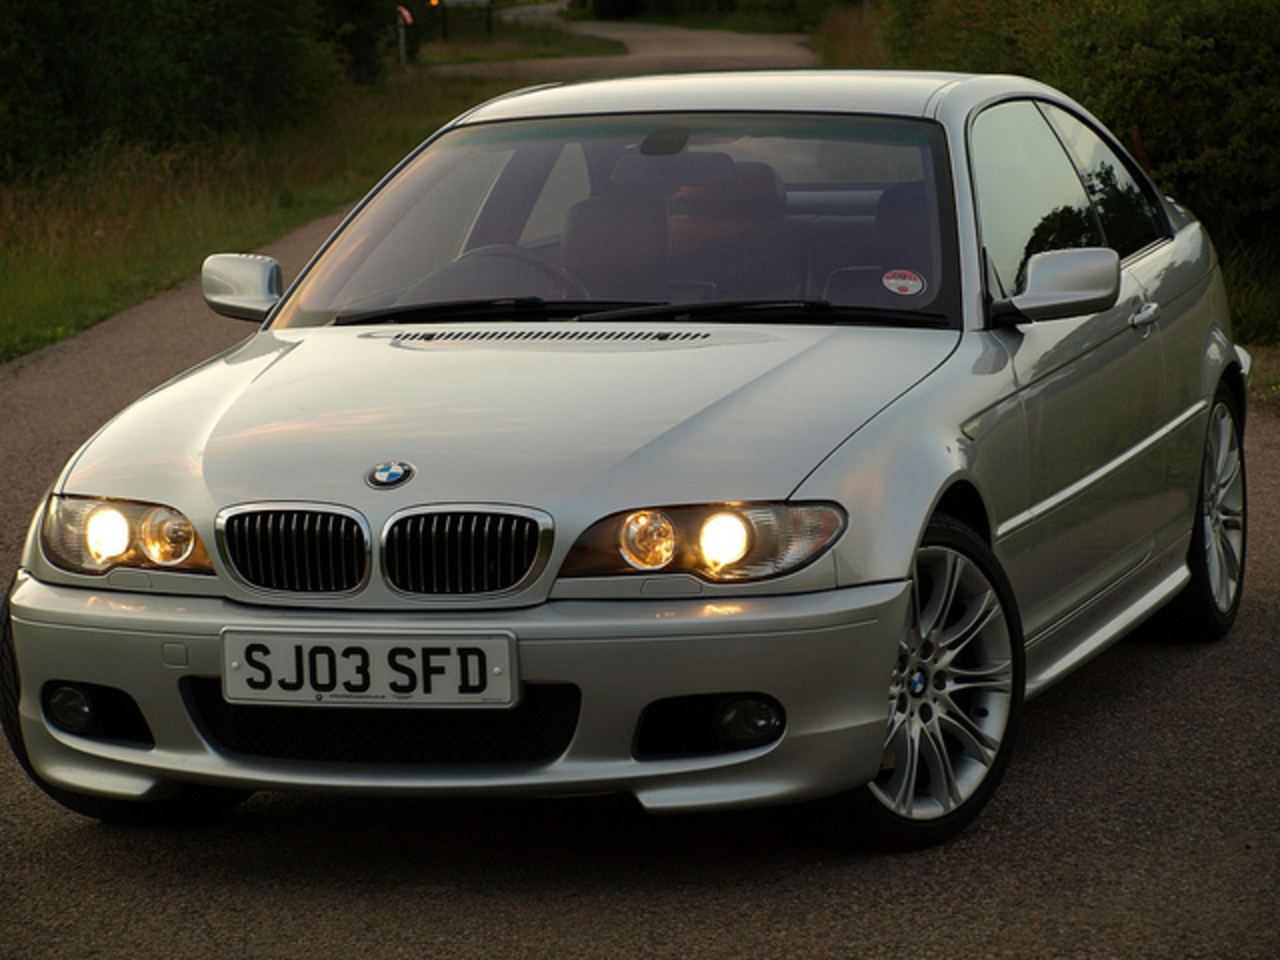 2003 BMW 330ci SPORT | Flickr - Photo Sharing!